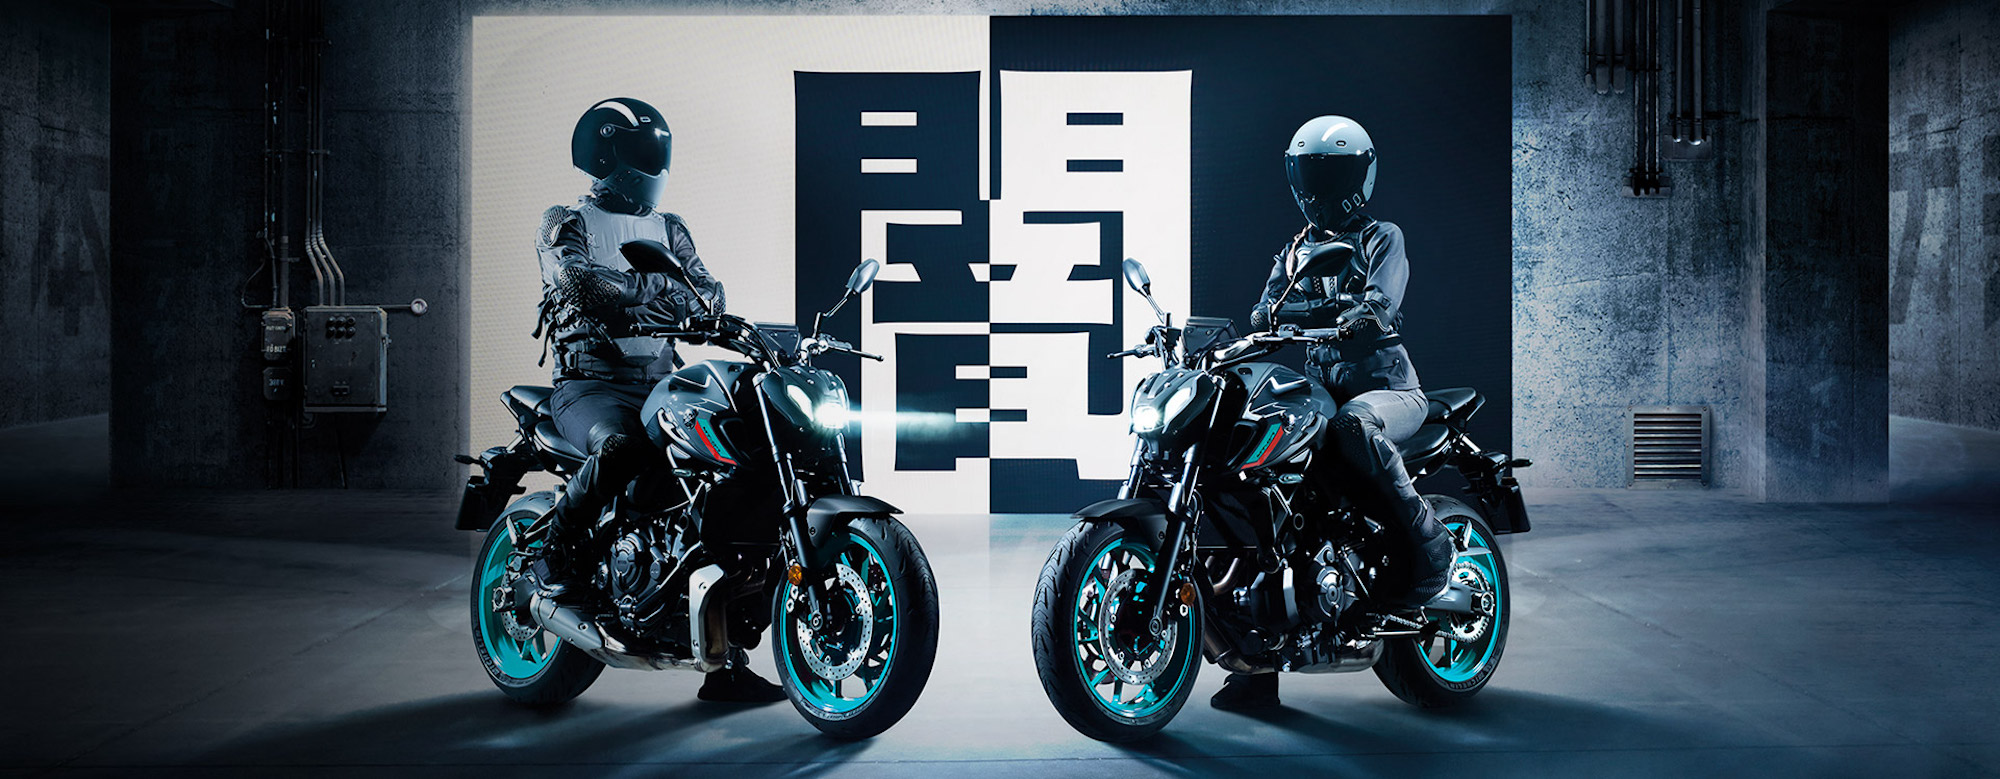 2020 Yamaha MT03 midnight black colour option  IAMABIKER  Everything  Motorcycle